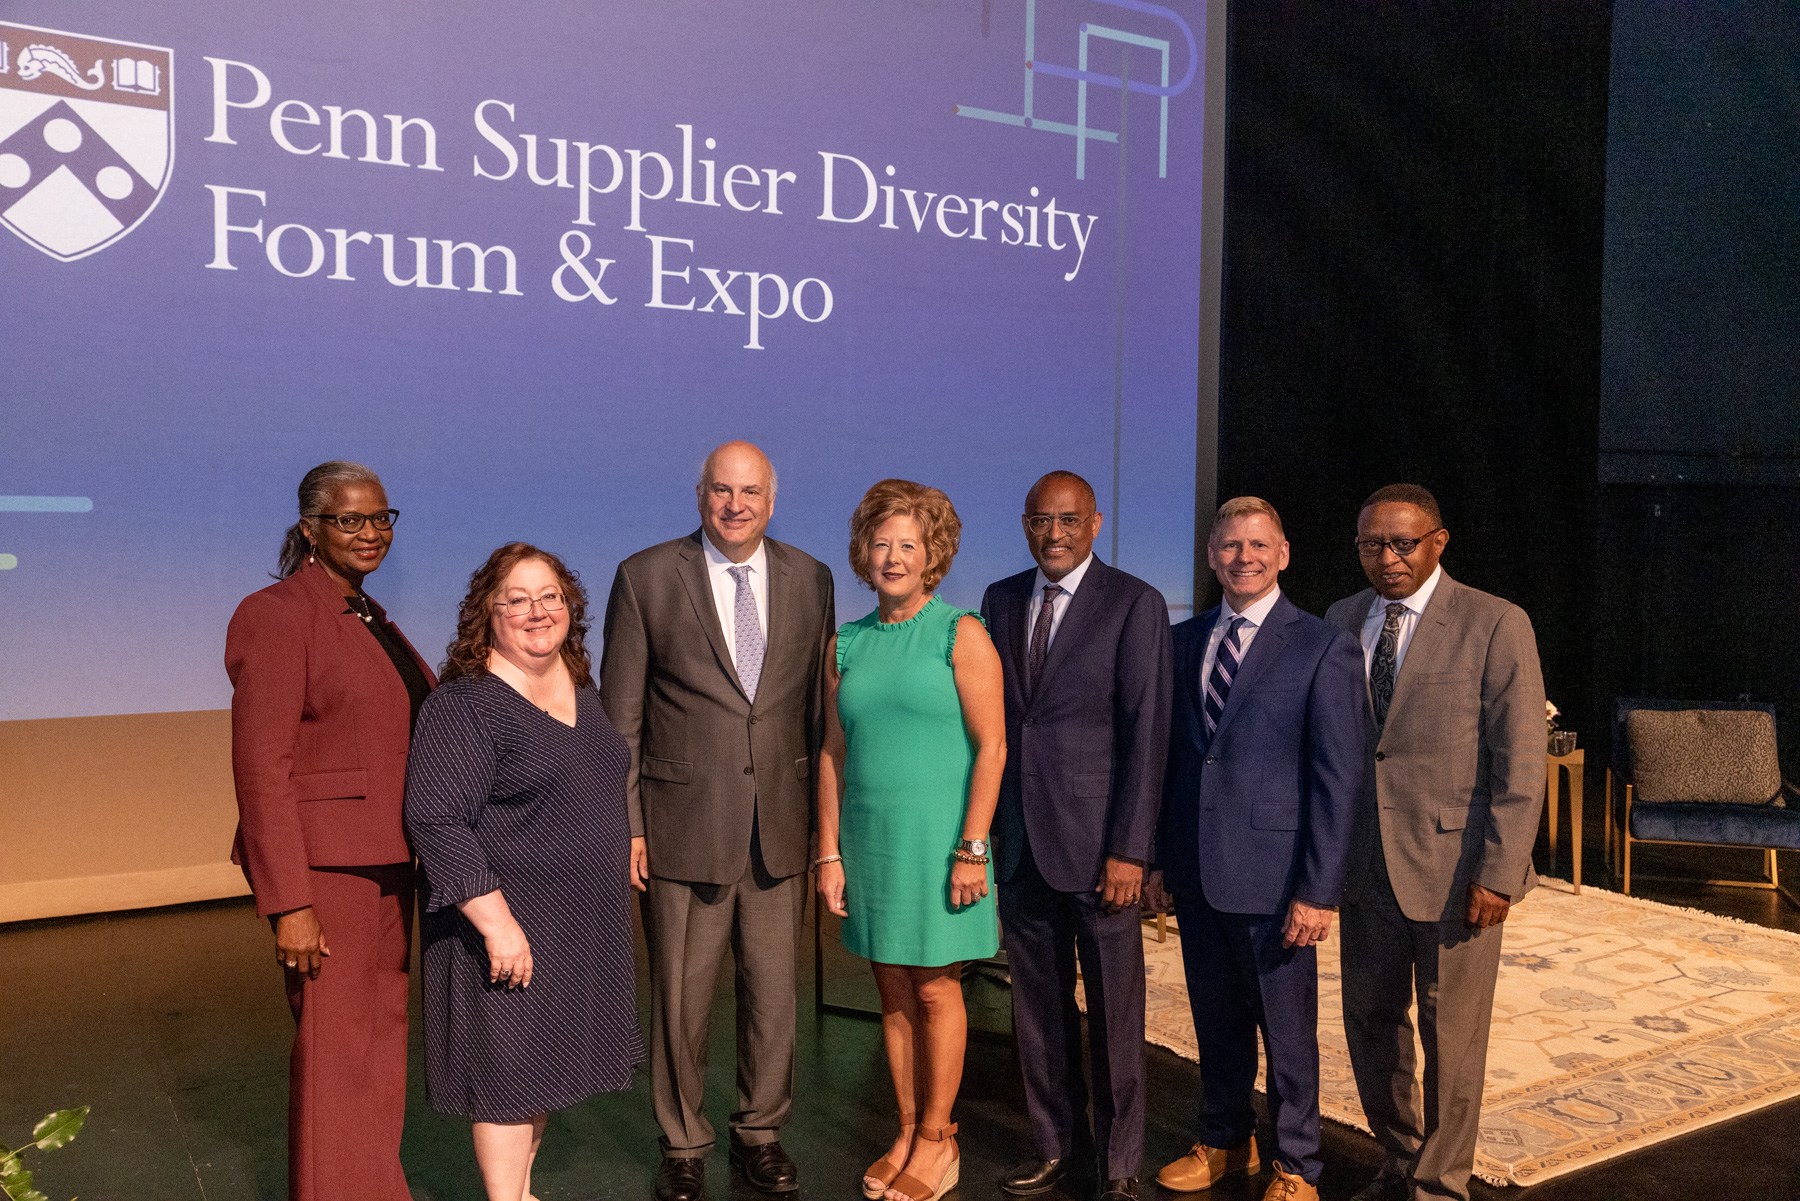 Penn Supplier Diversity Impact Award Being Presented to Karoline Prosperi